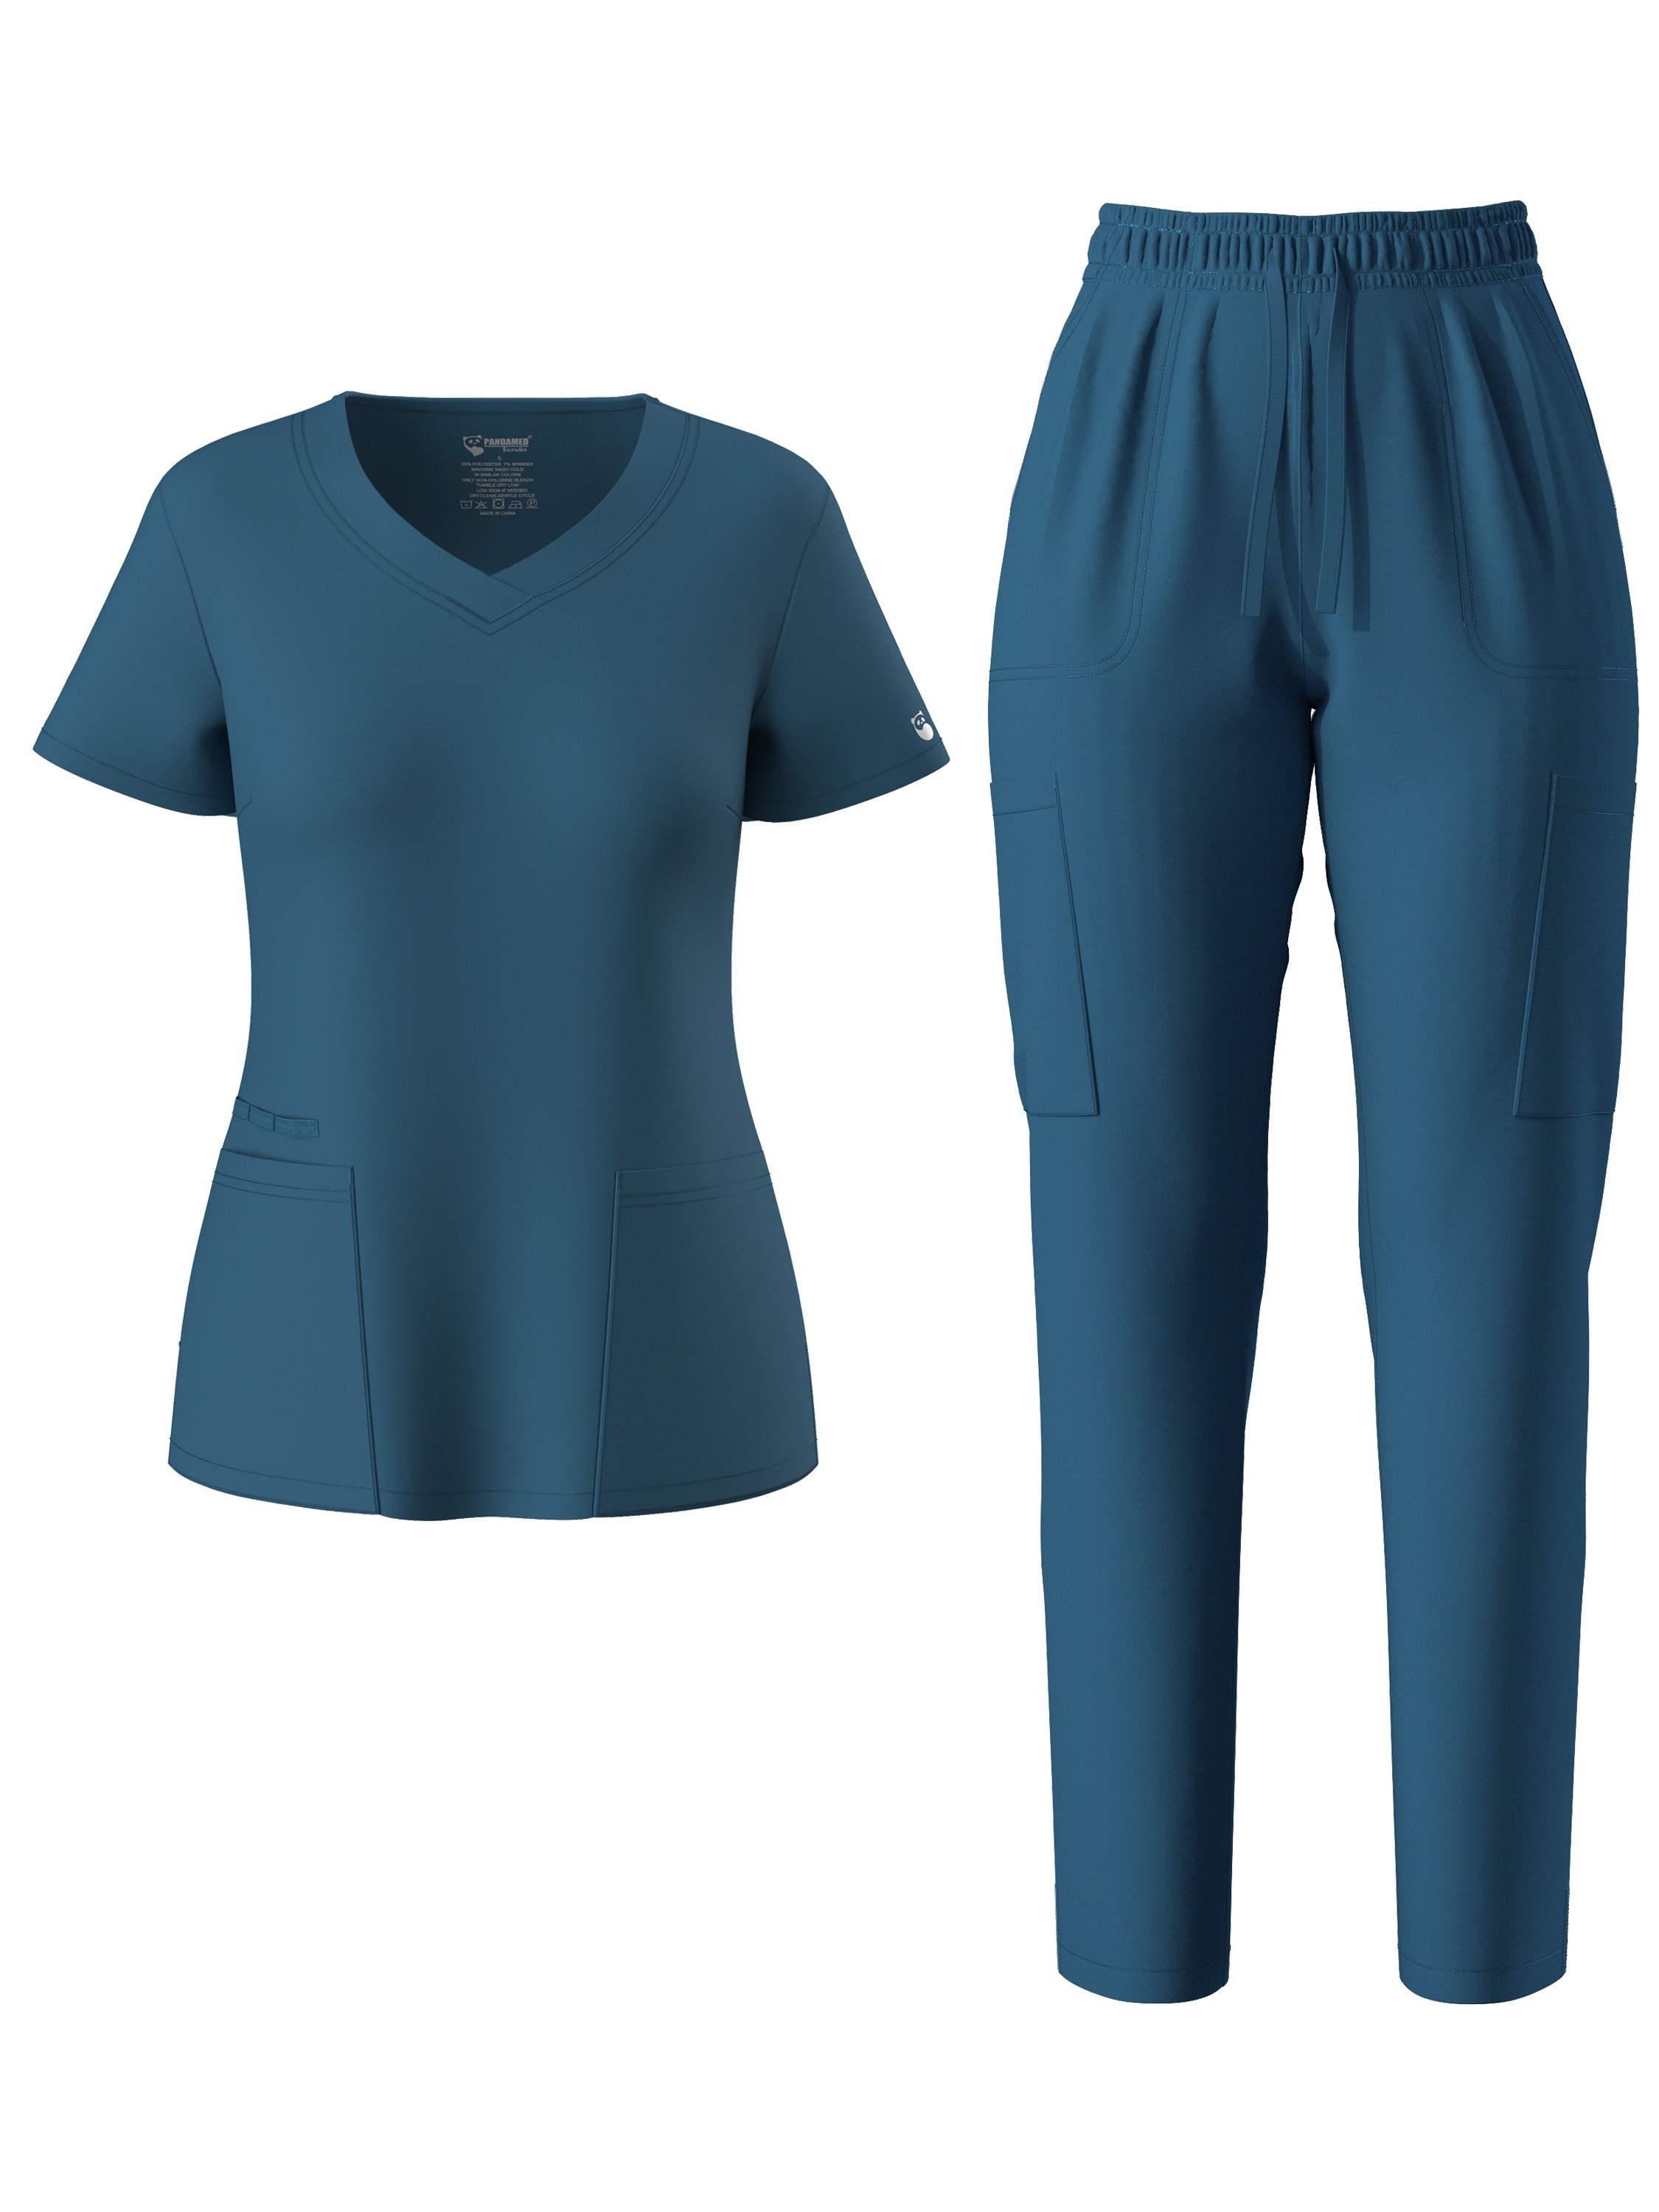 Nurse Uniform Women Solid Color Scrubs Tops Uniforms Short Sleeve P